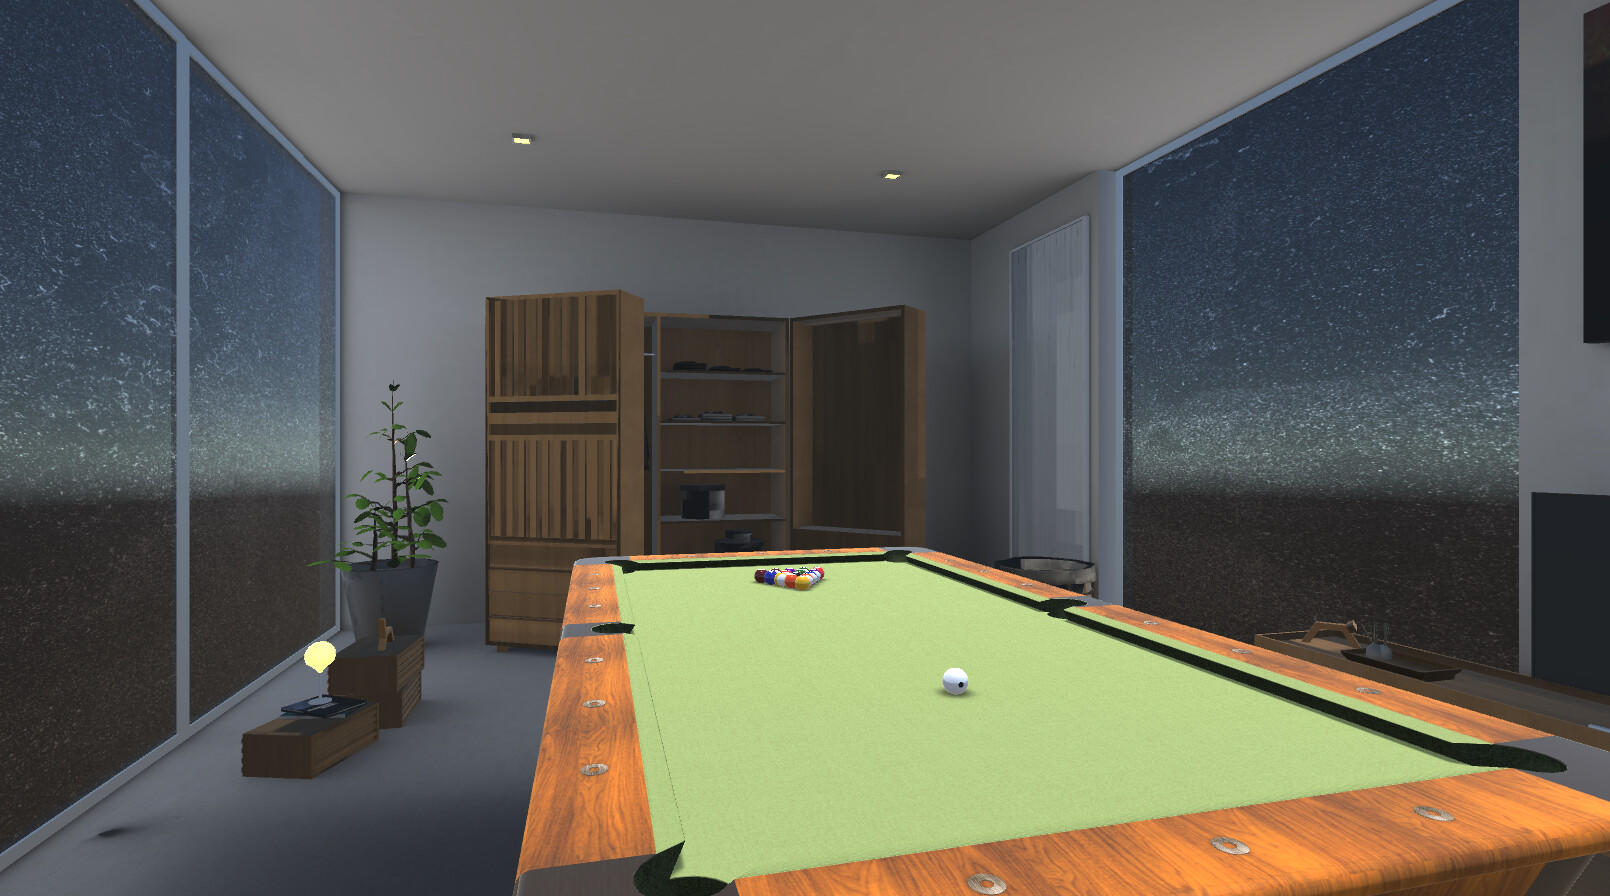 Pocketing the ball-Billiards Simulator screenshot game